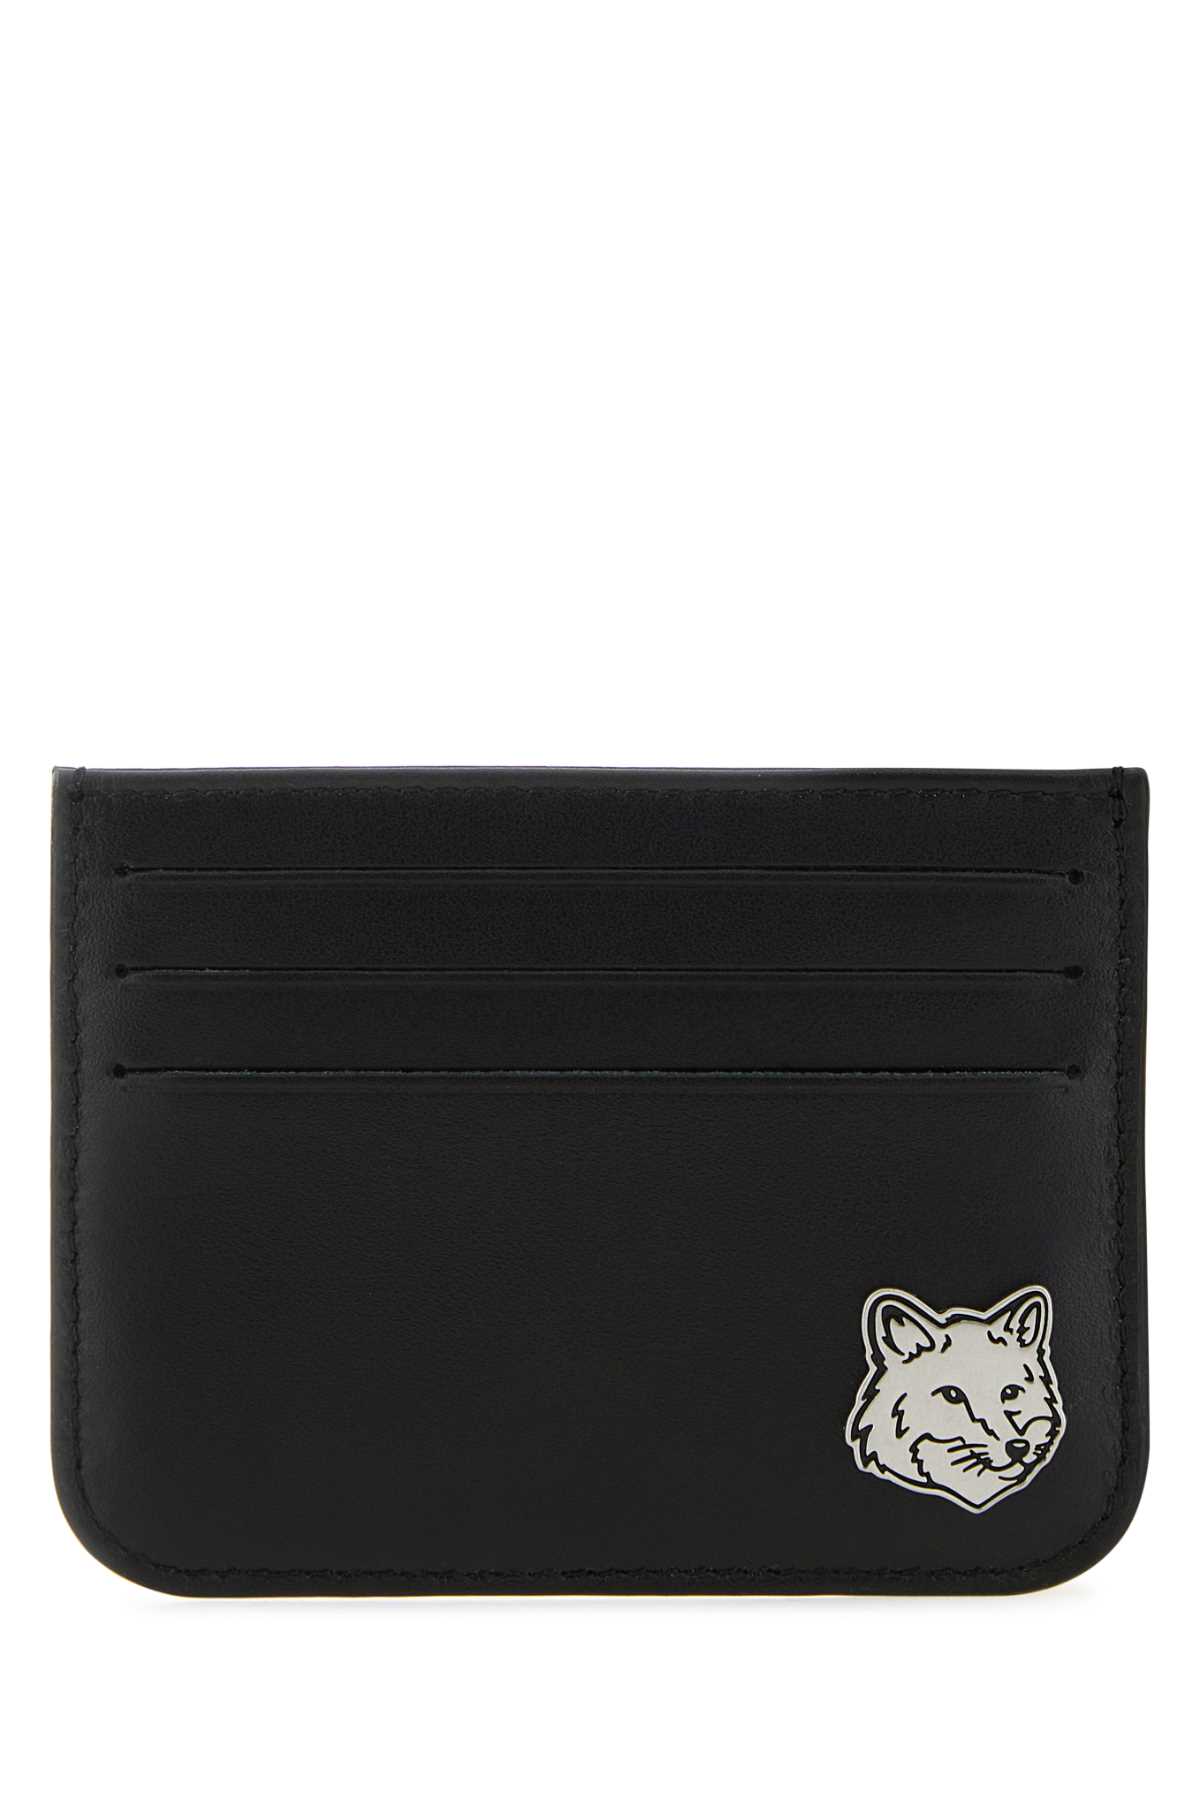 Shop Maison Kitsuné Black Leather Card Holder